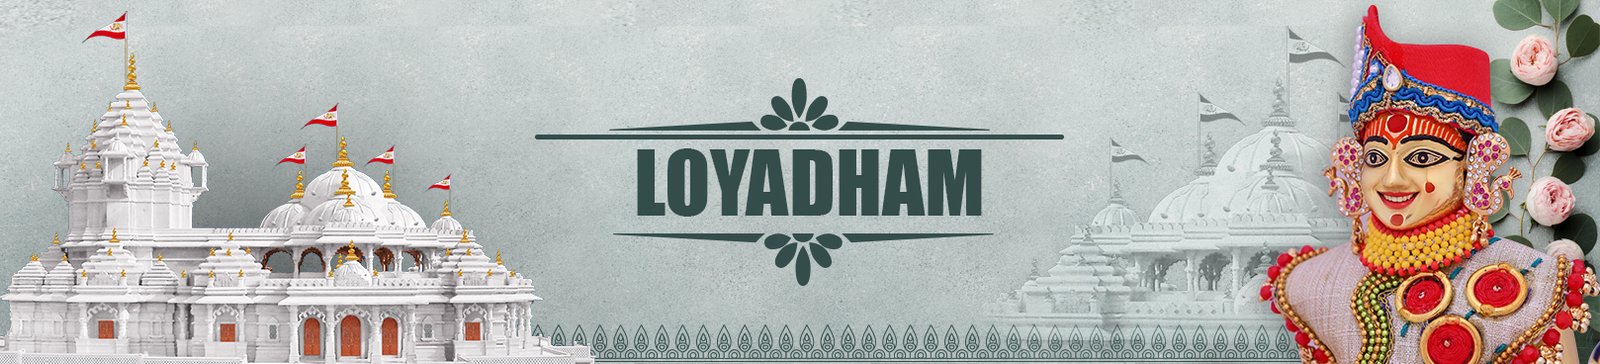 Loyadham